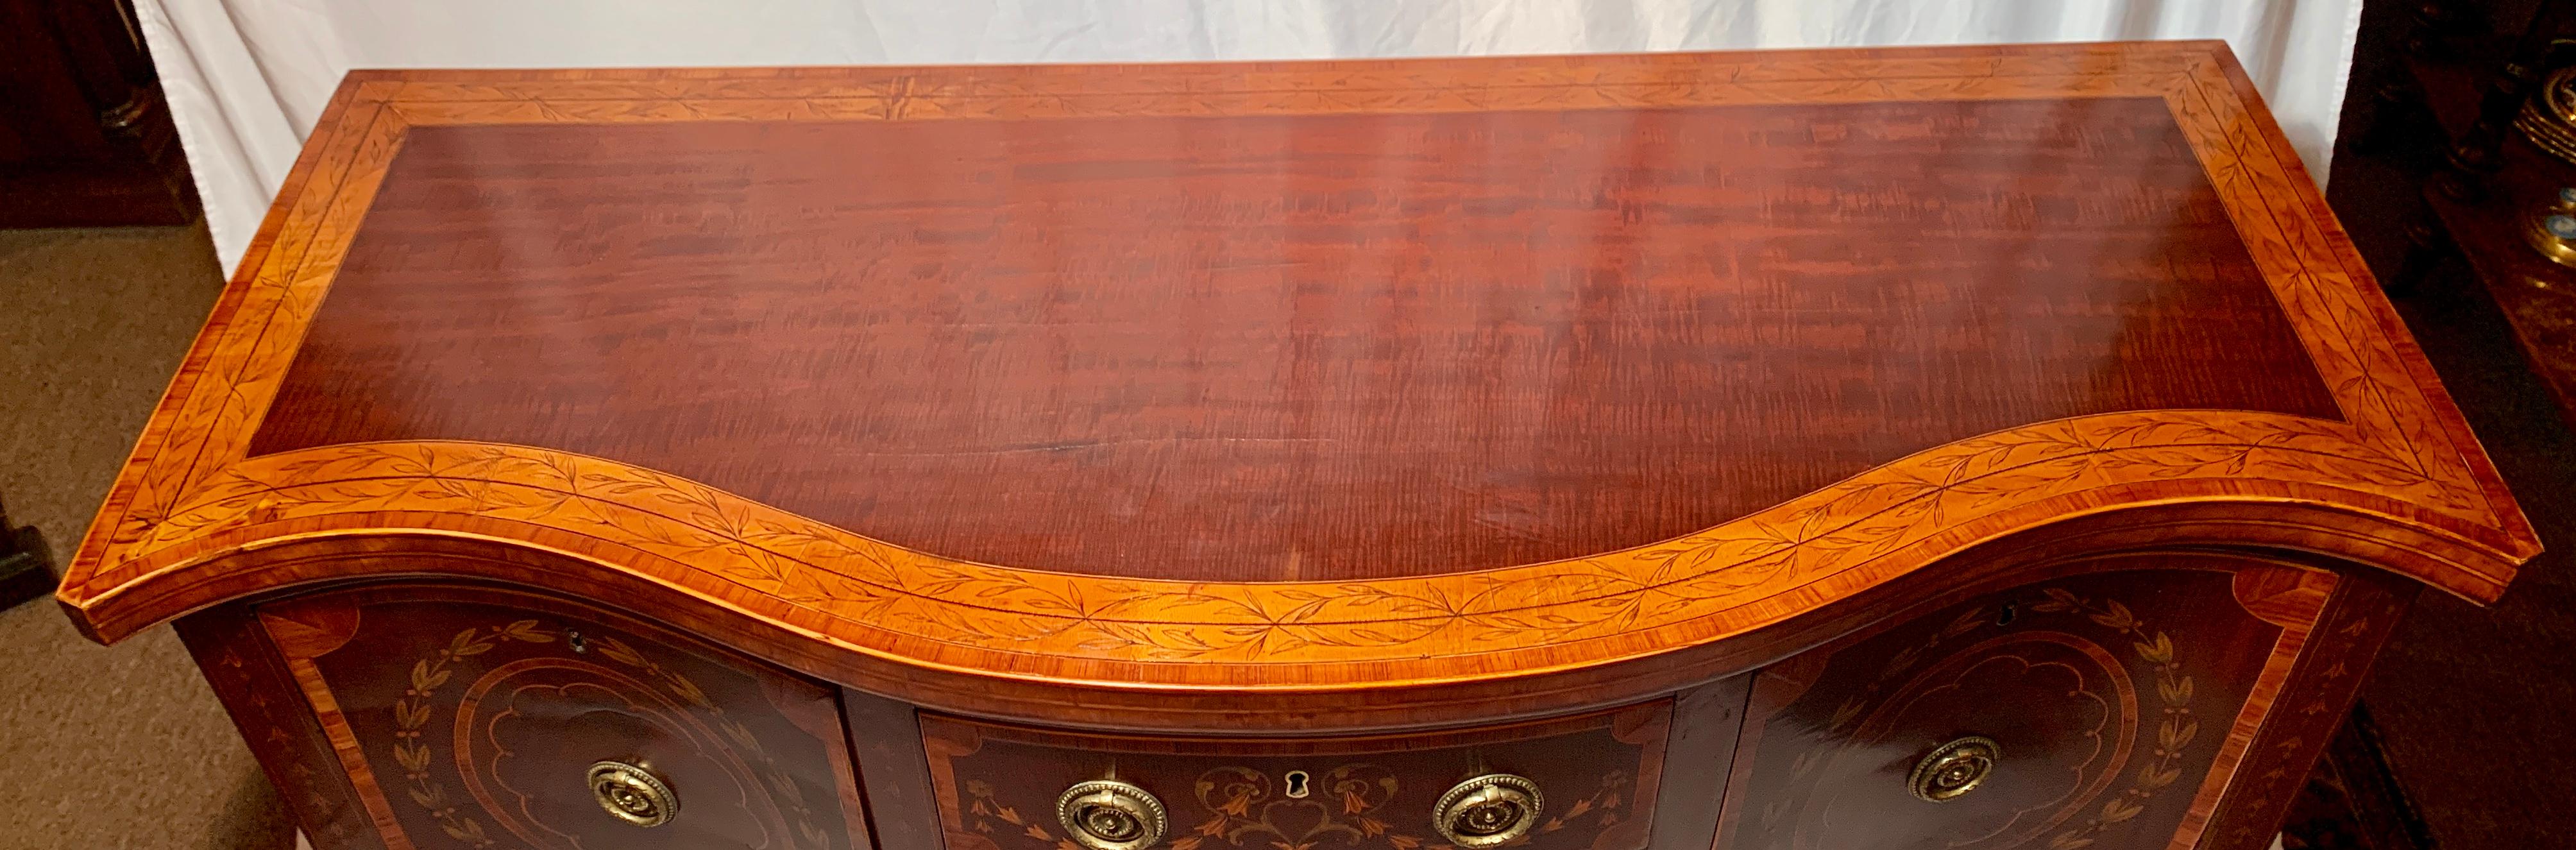 Inlay Antique English Satinwood Inlaid Mahogany Sideboard, circa 1860 For Sale